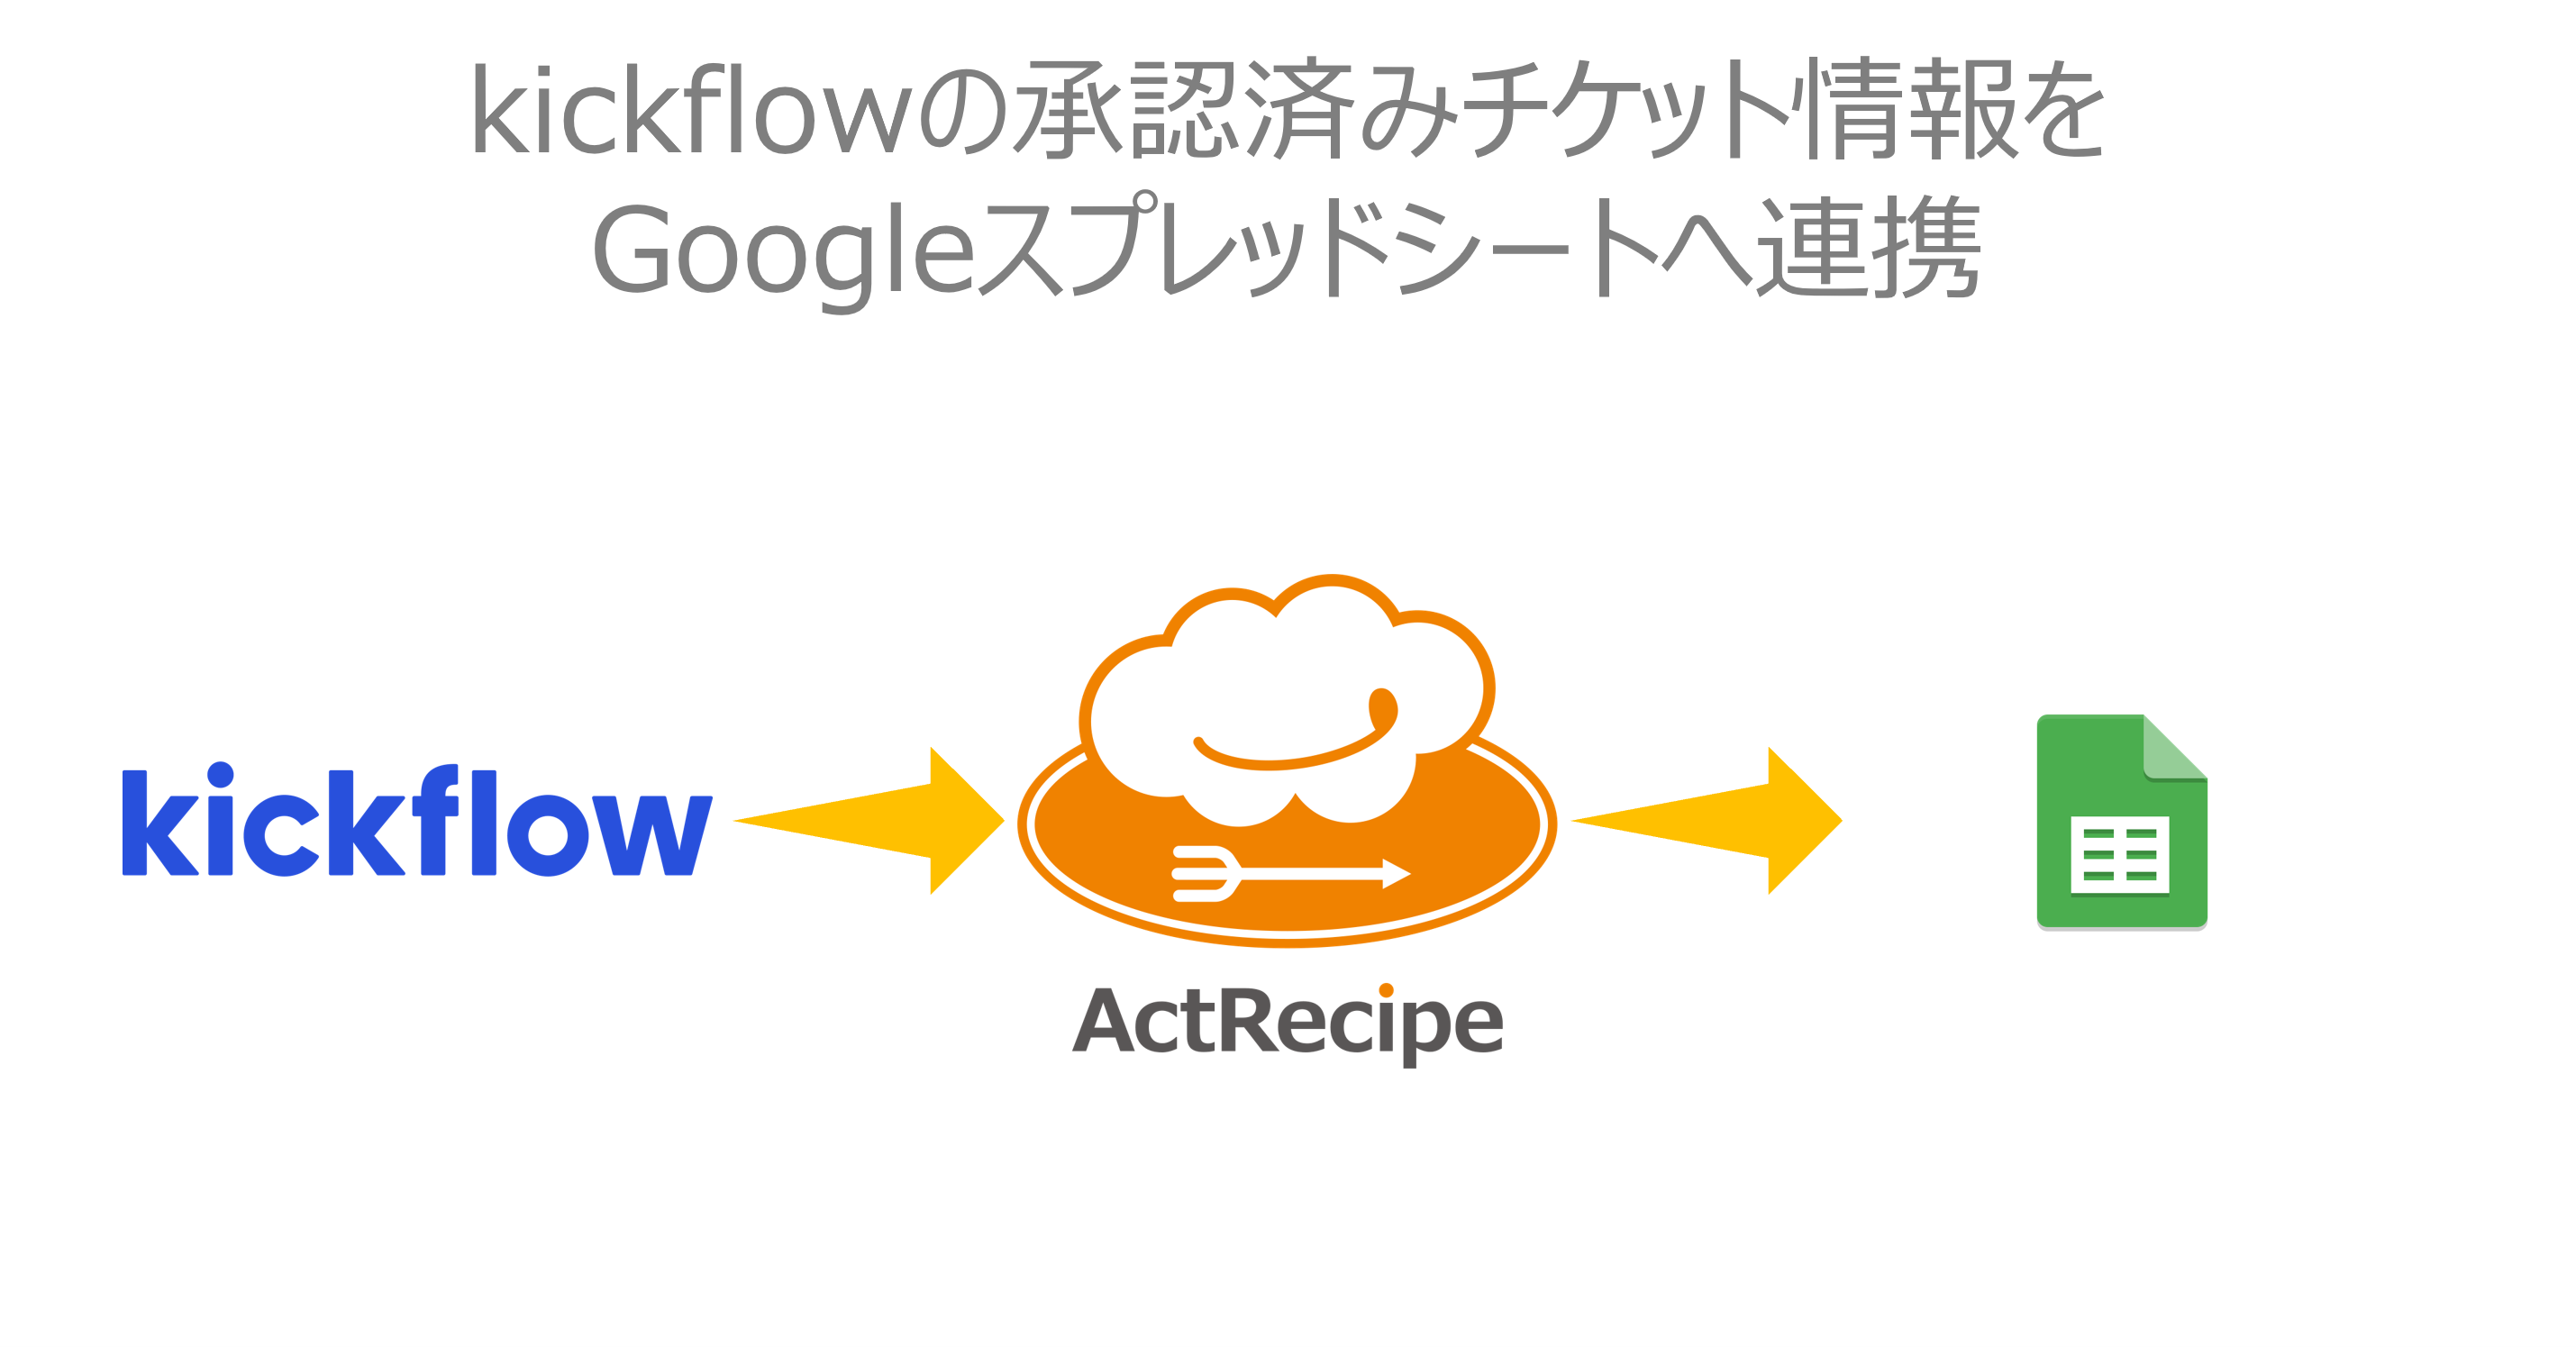 kickflow____________Google___________.png